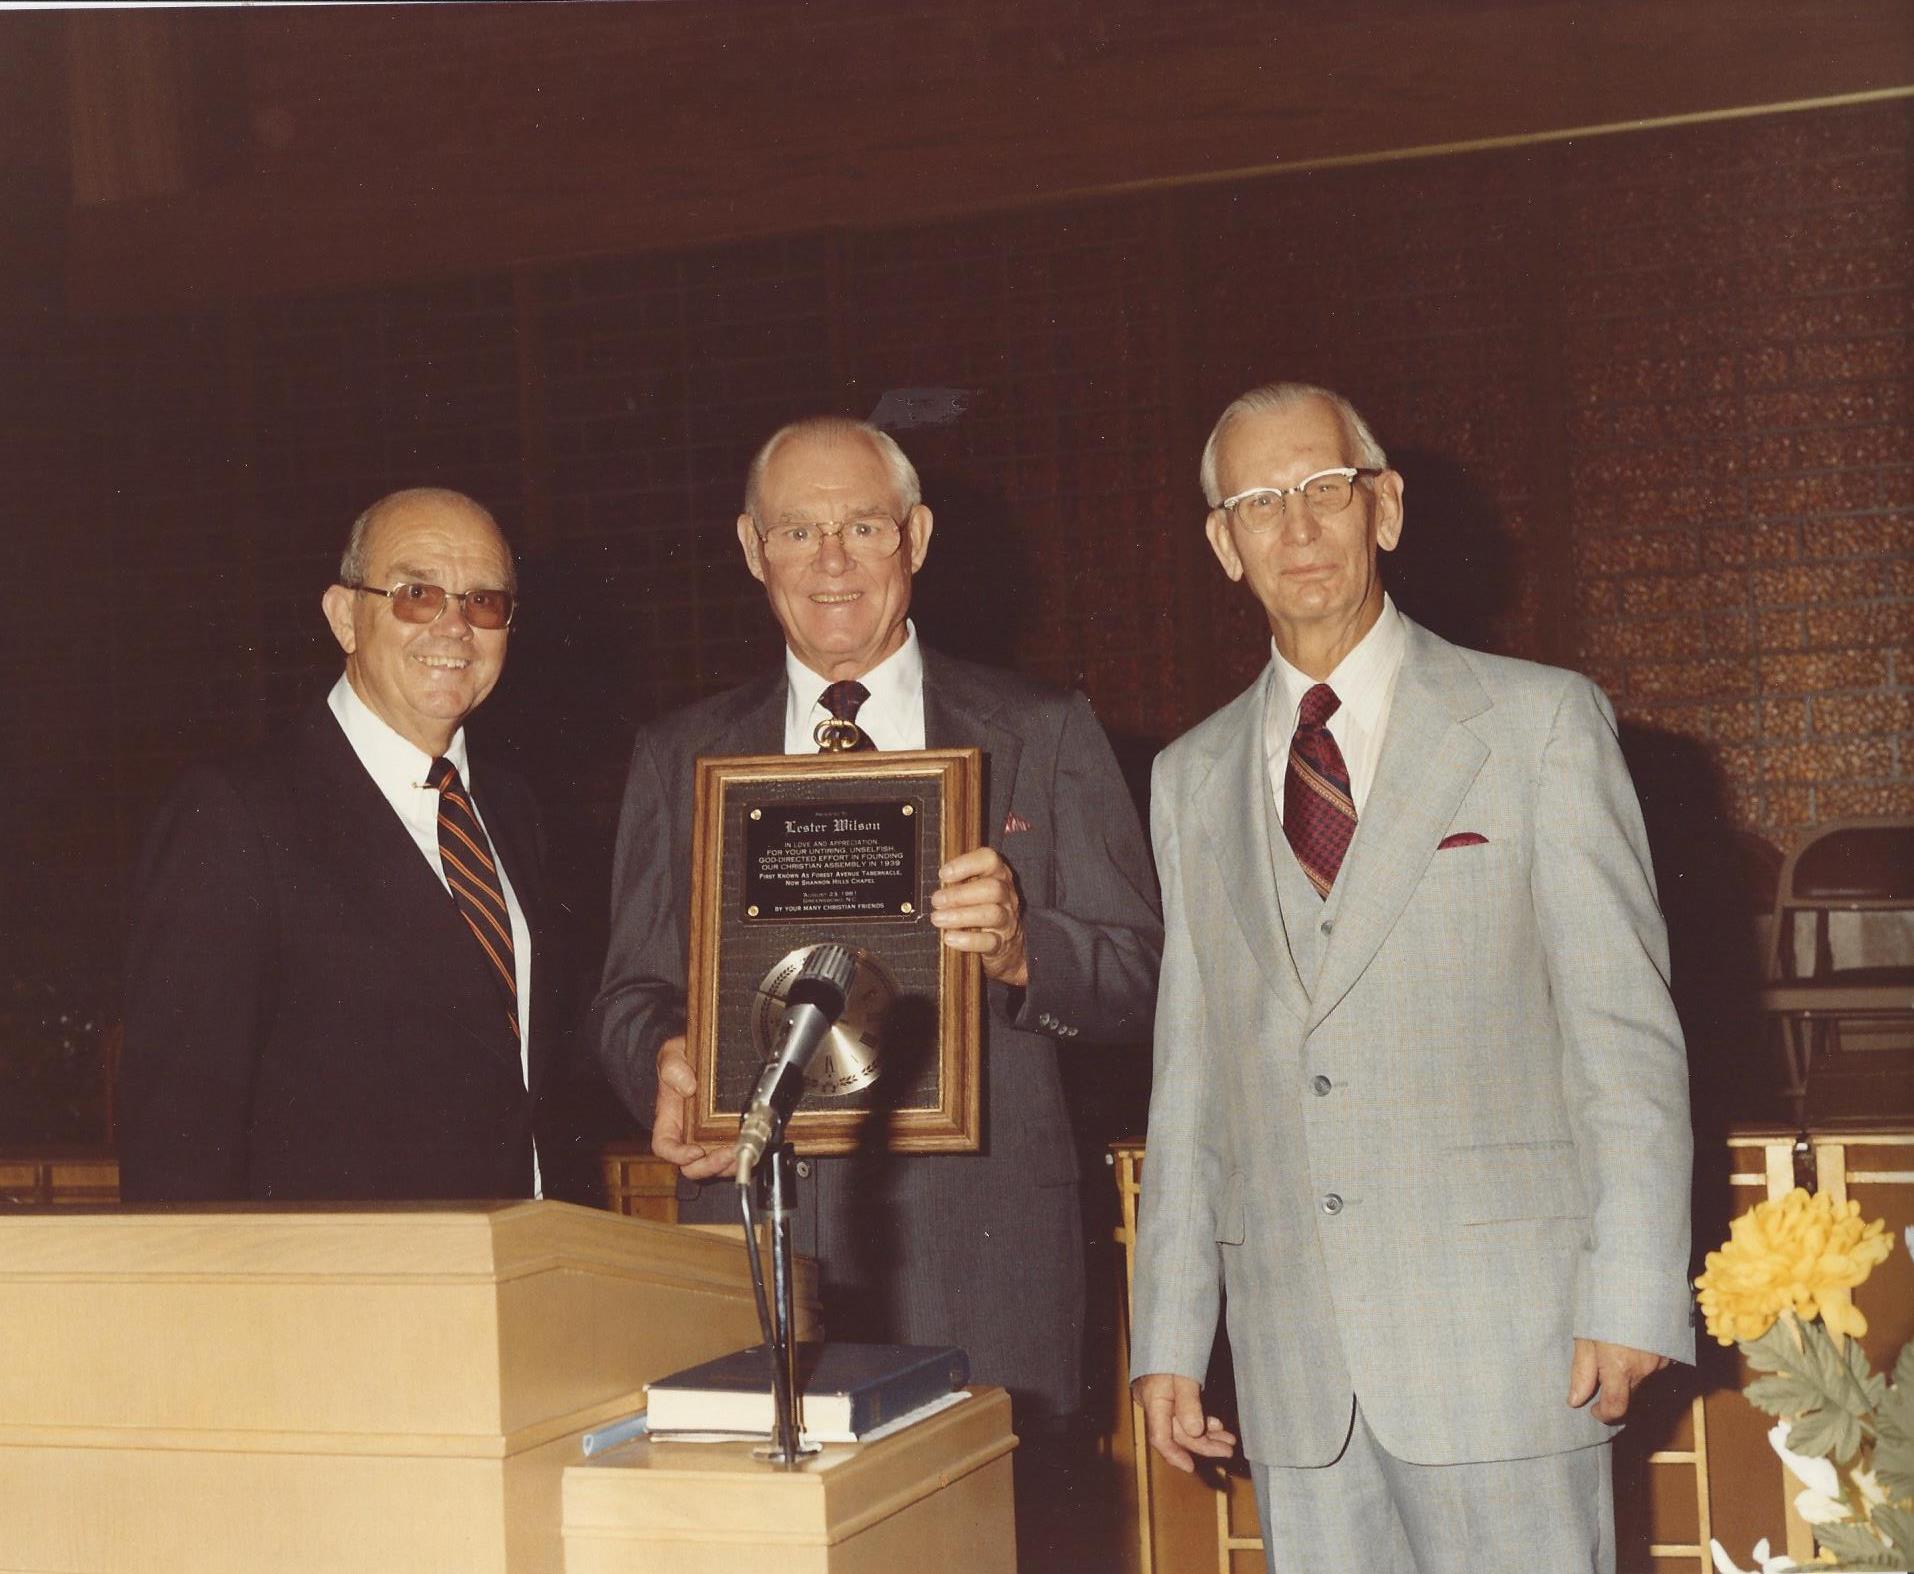 Dick Andrews, Lester Wilson and H.G. Mackay